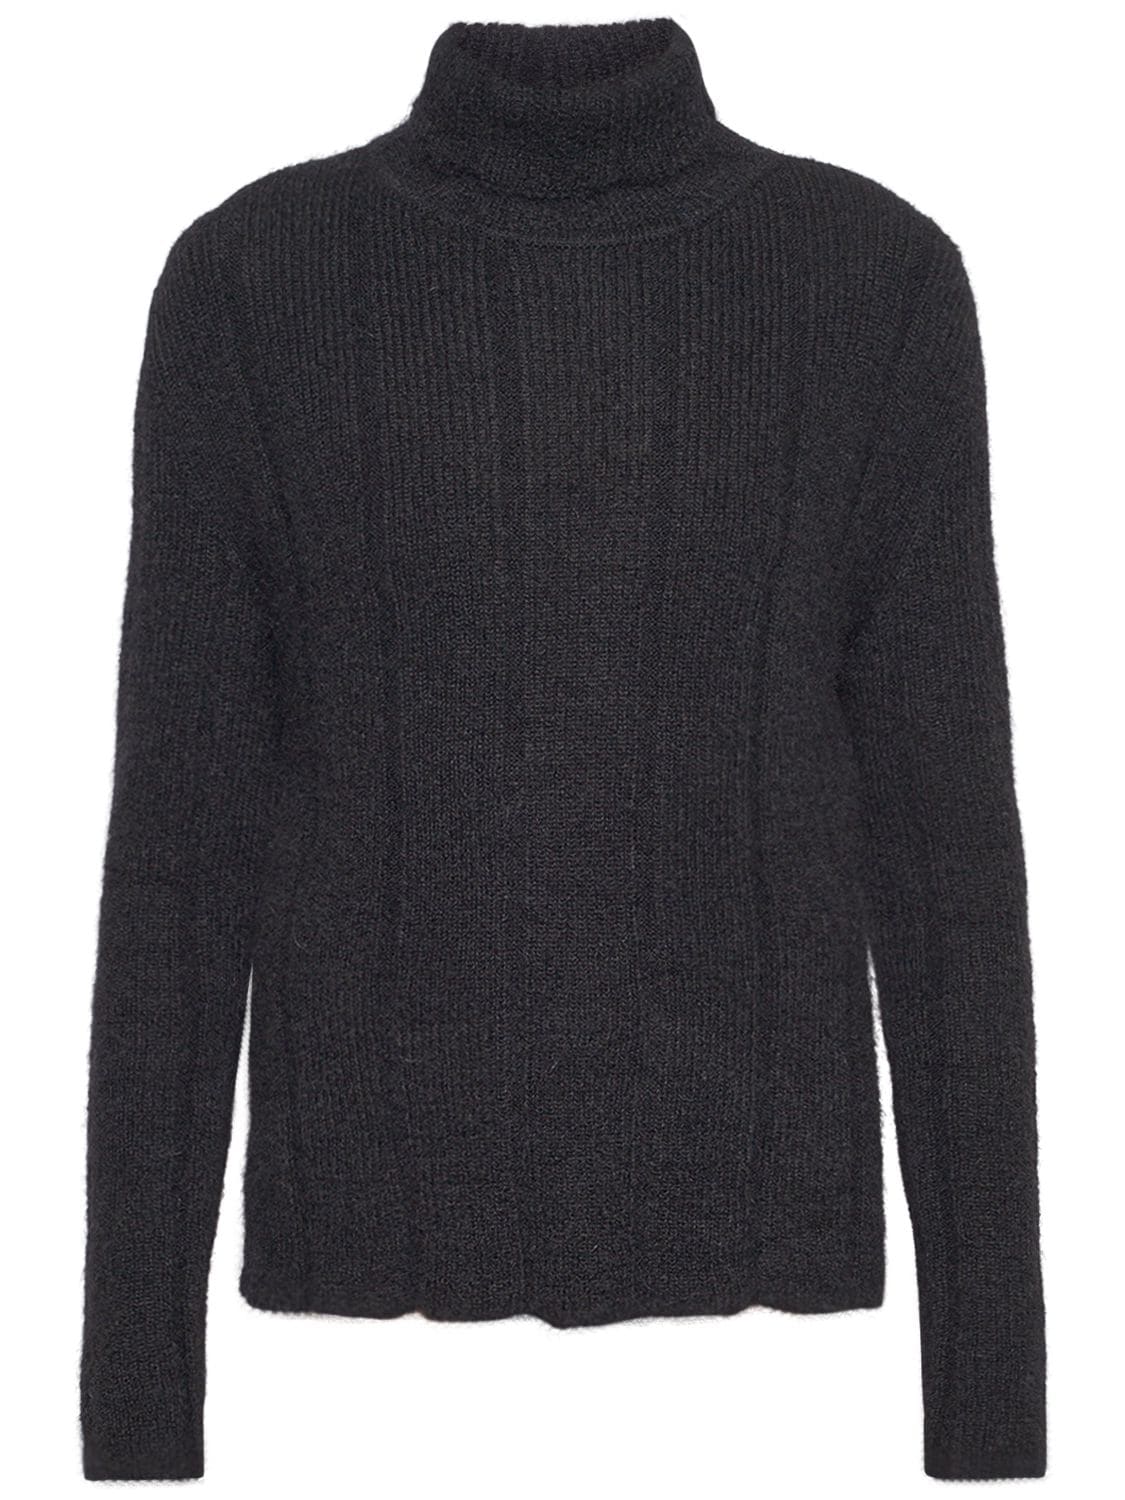 Saint Laurent Mohair Blend Knit Sweater In Black